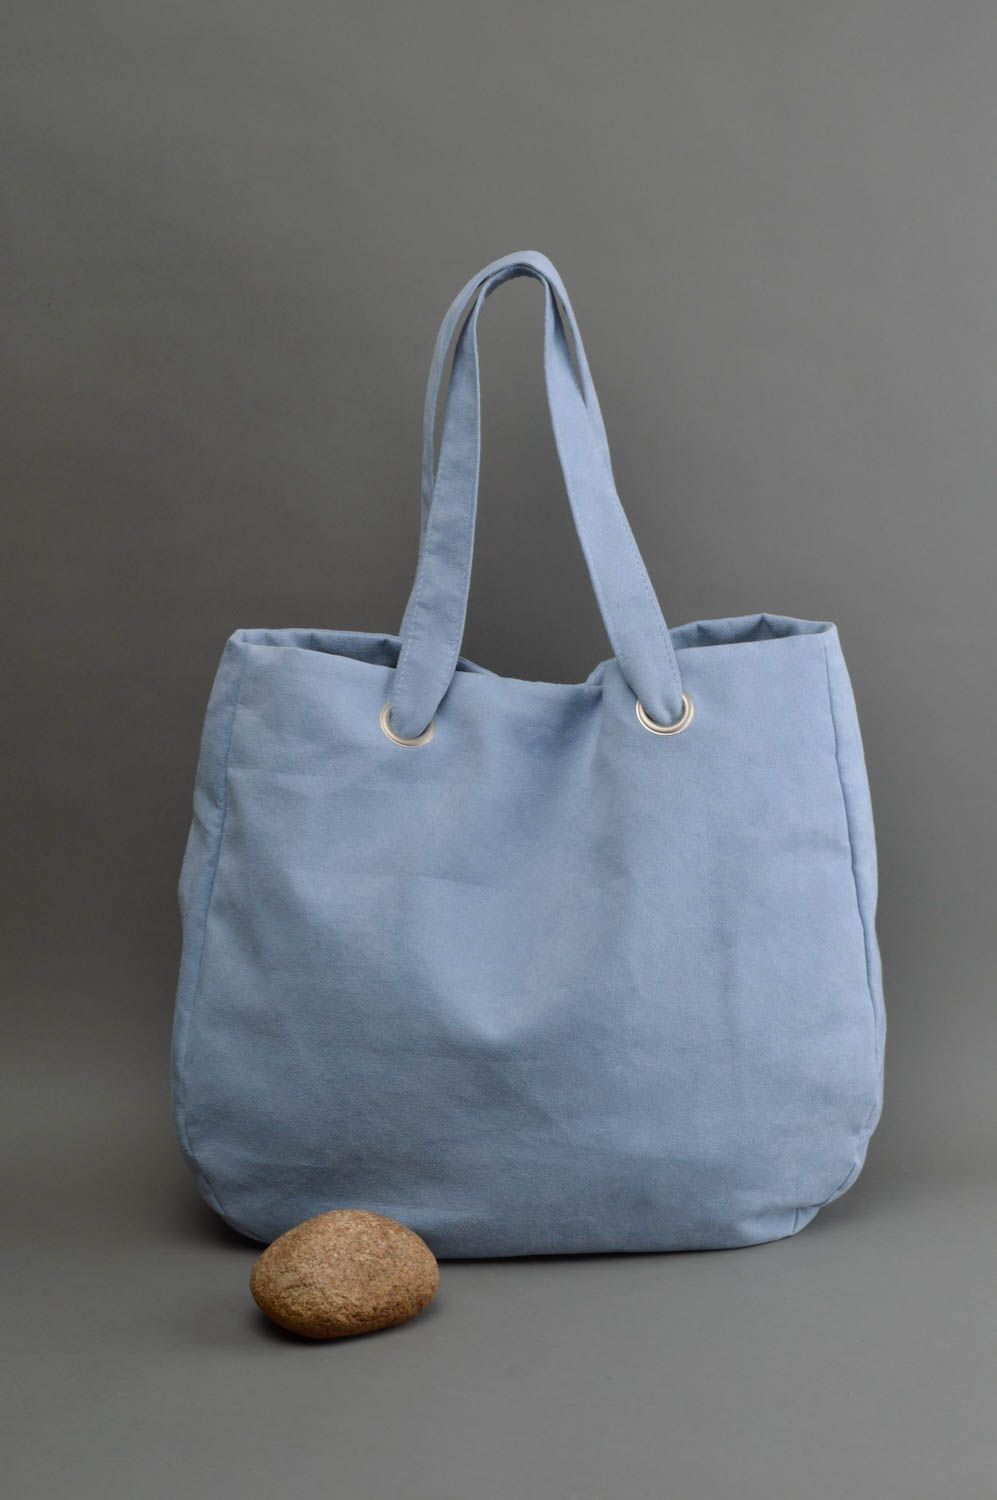 Handmade suede handbag designer purse accessories for women gift idea for girl photo 1